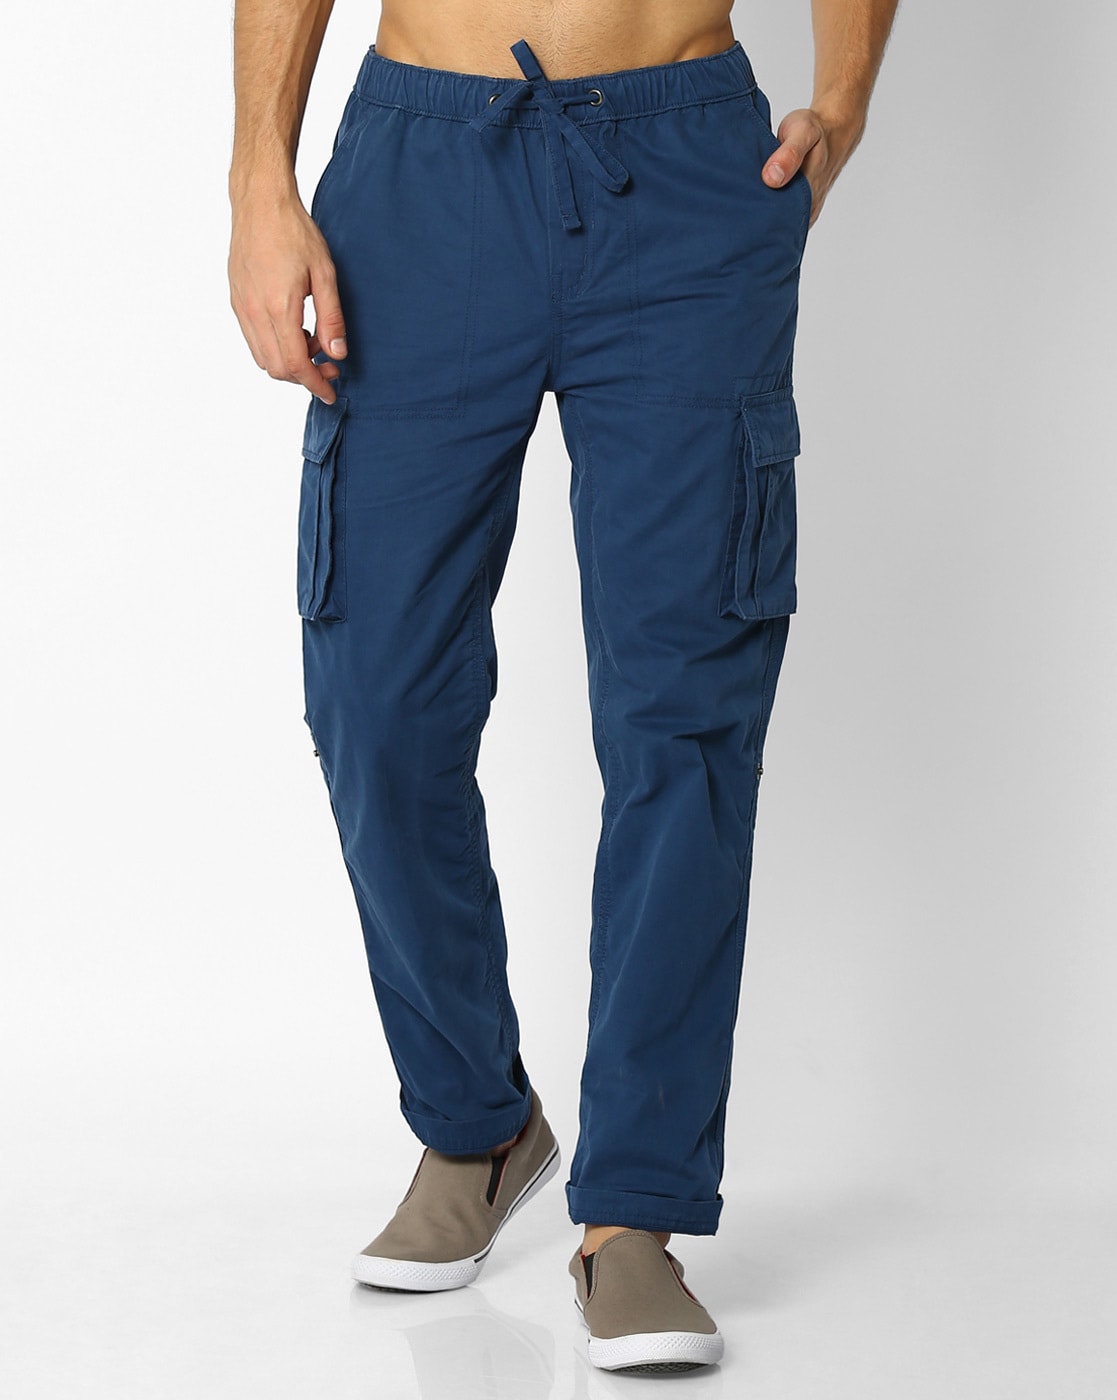 Buy Blue Track Pants for Men by Teamspirit Online  Ajiocom